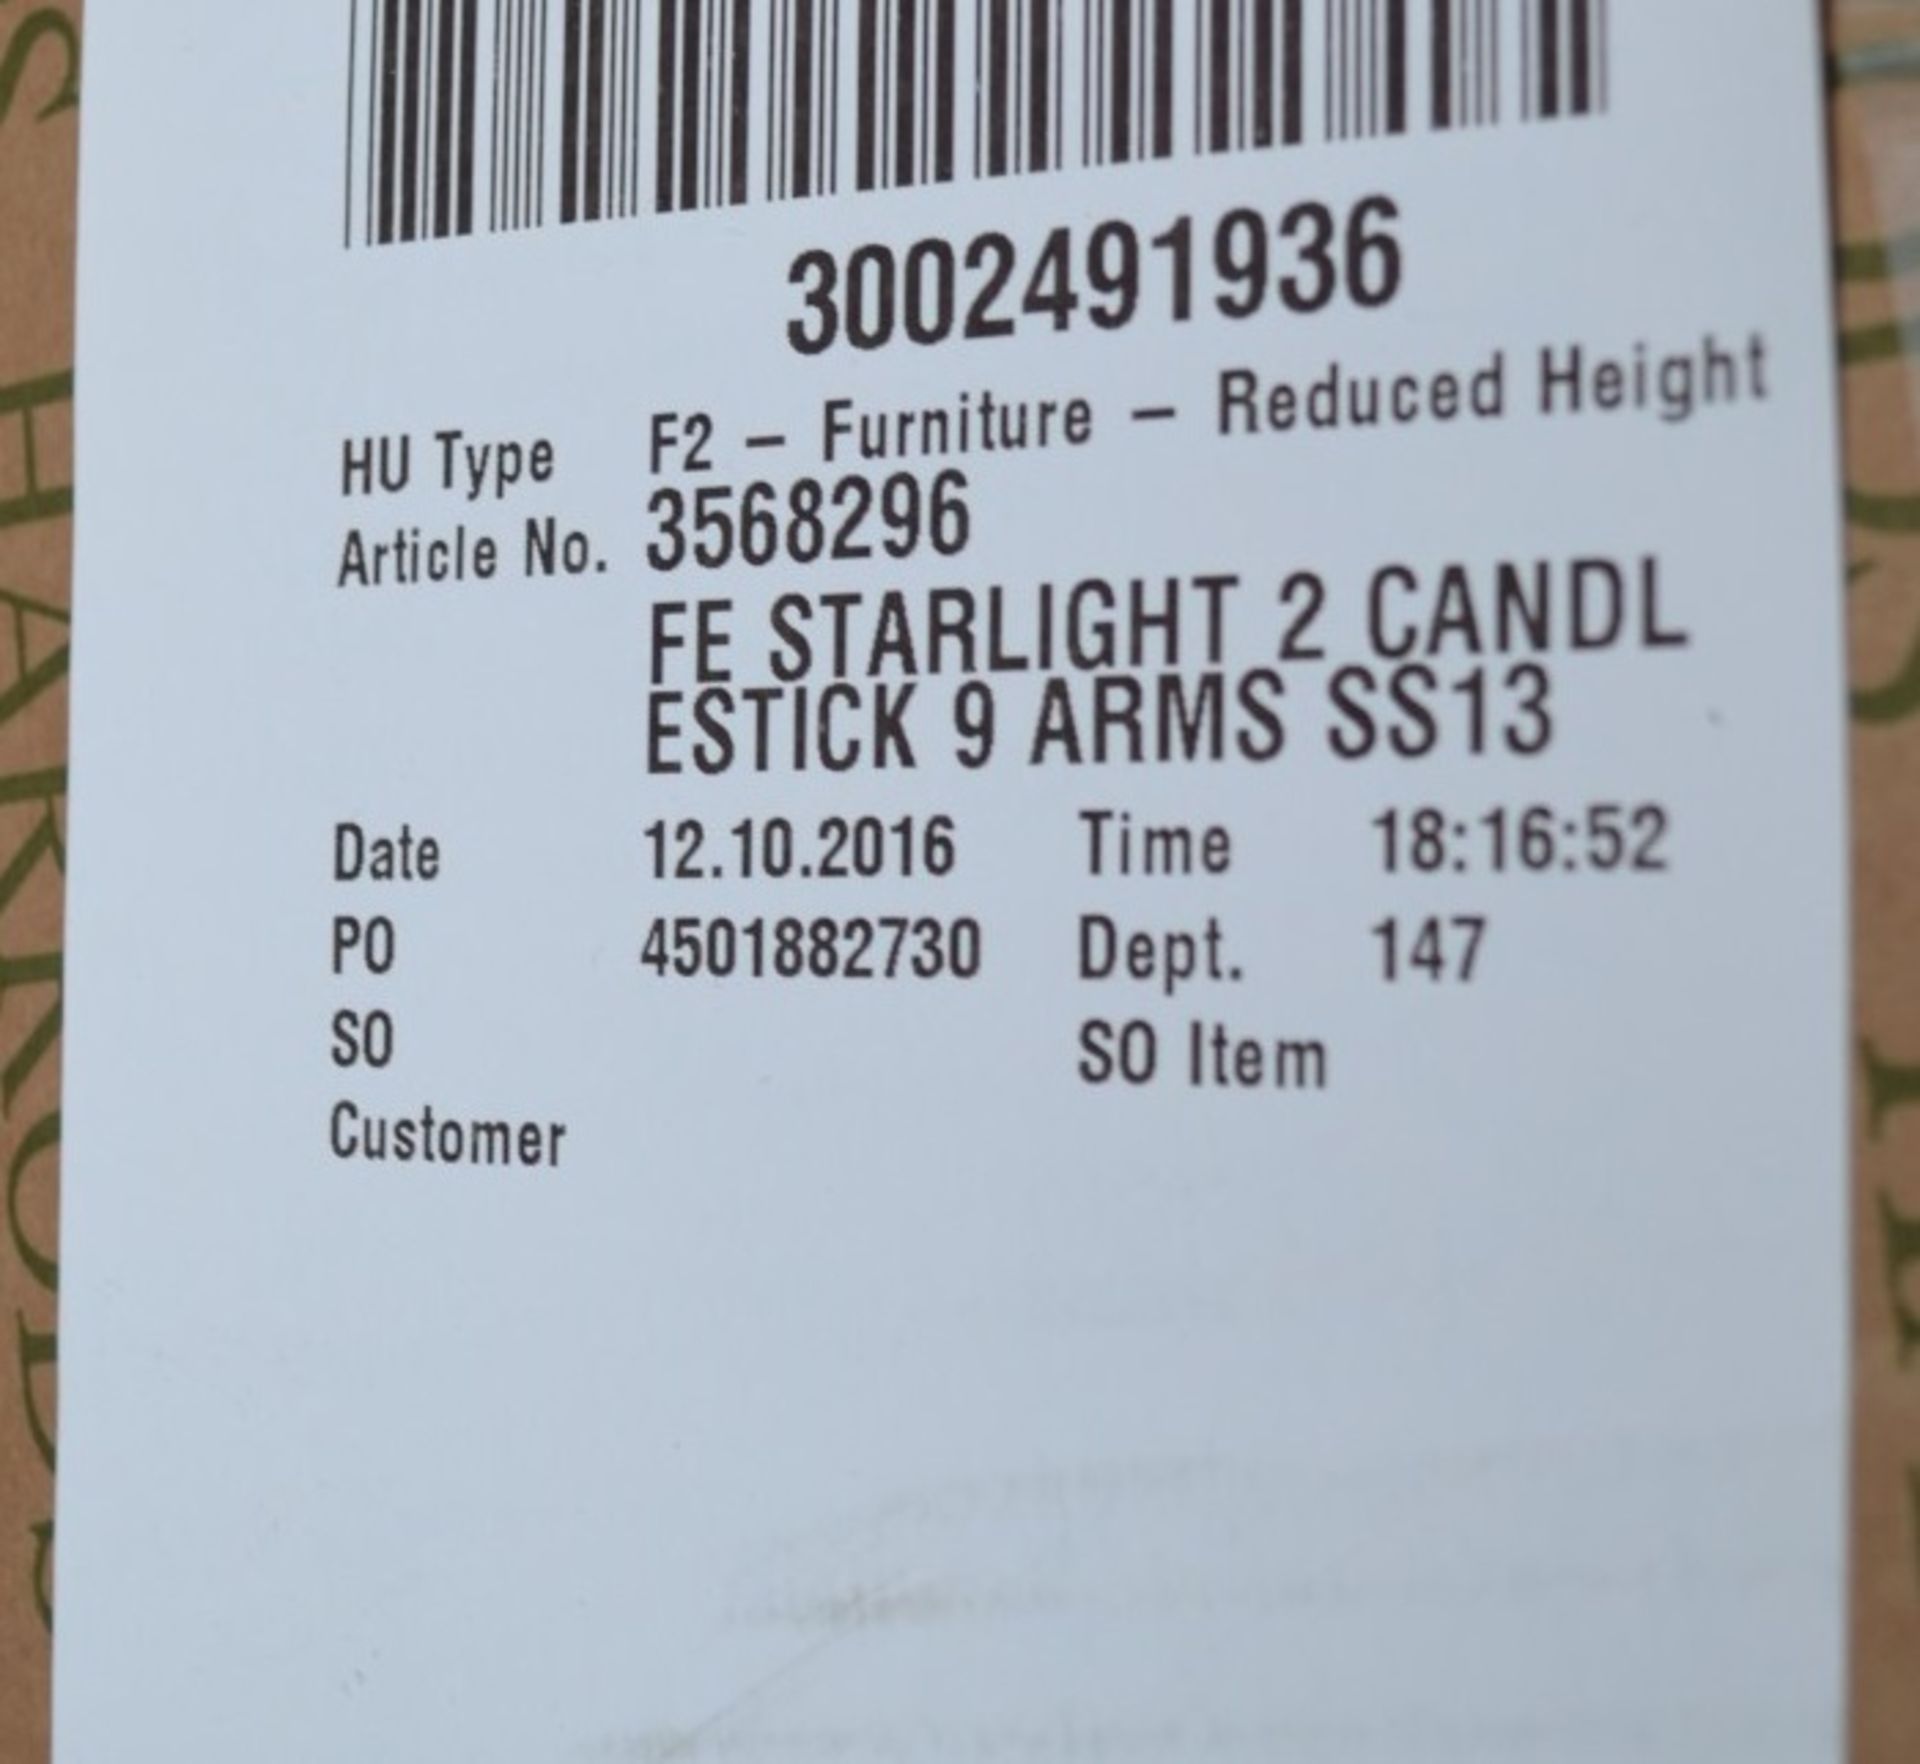 1 x FENDI "Starlight 2" 9-Arm Candlestick - Ref: 3568296 P3 - Dimensions: H43 x W48 x D45cm - - Image 7 of 8